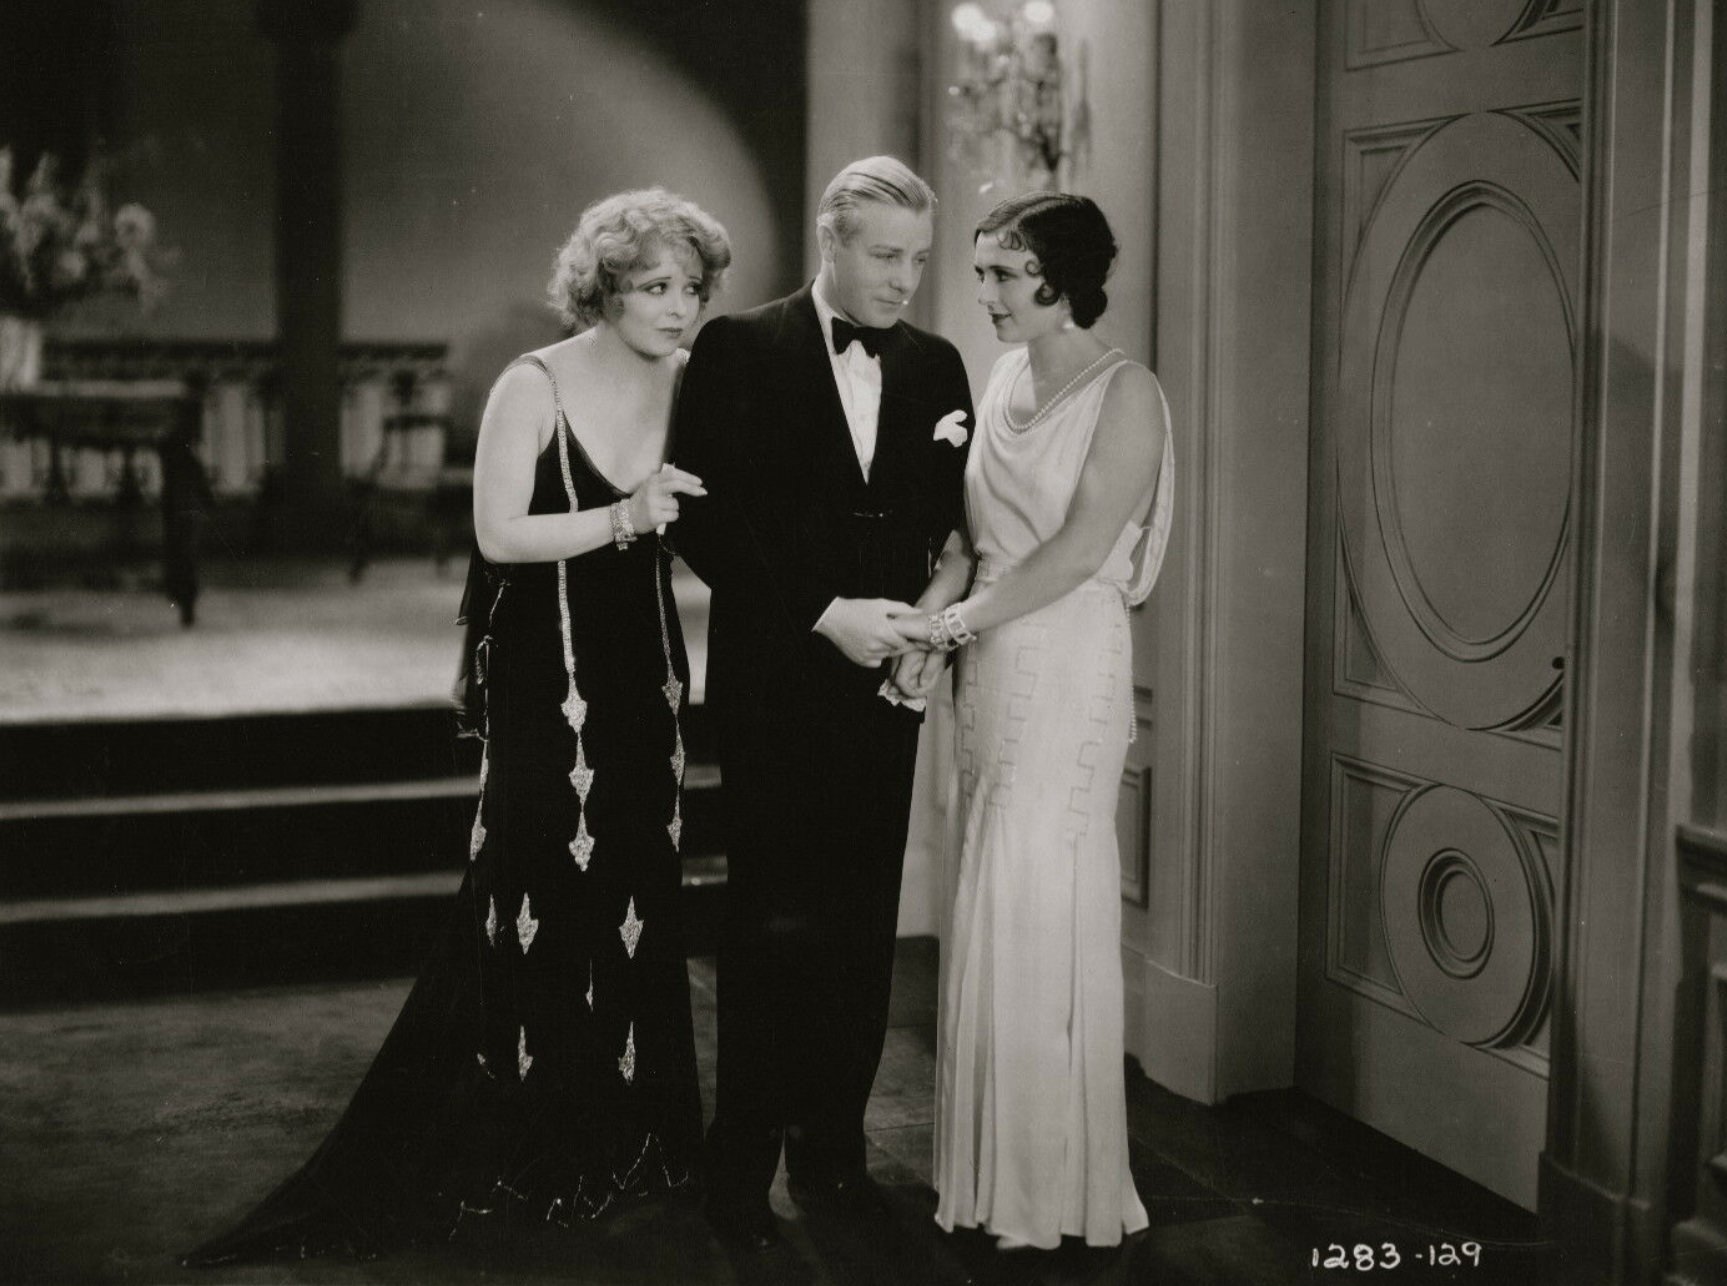 Clara Bow, Richard 'Skeets' Gallagher, and Rosita Moreno in 'Her Wedding Night', 1930